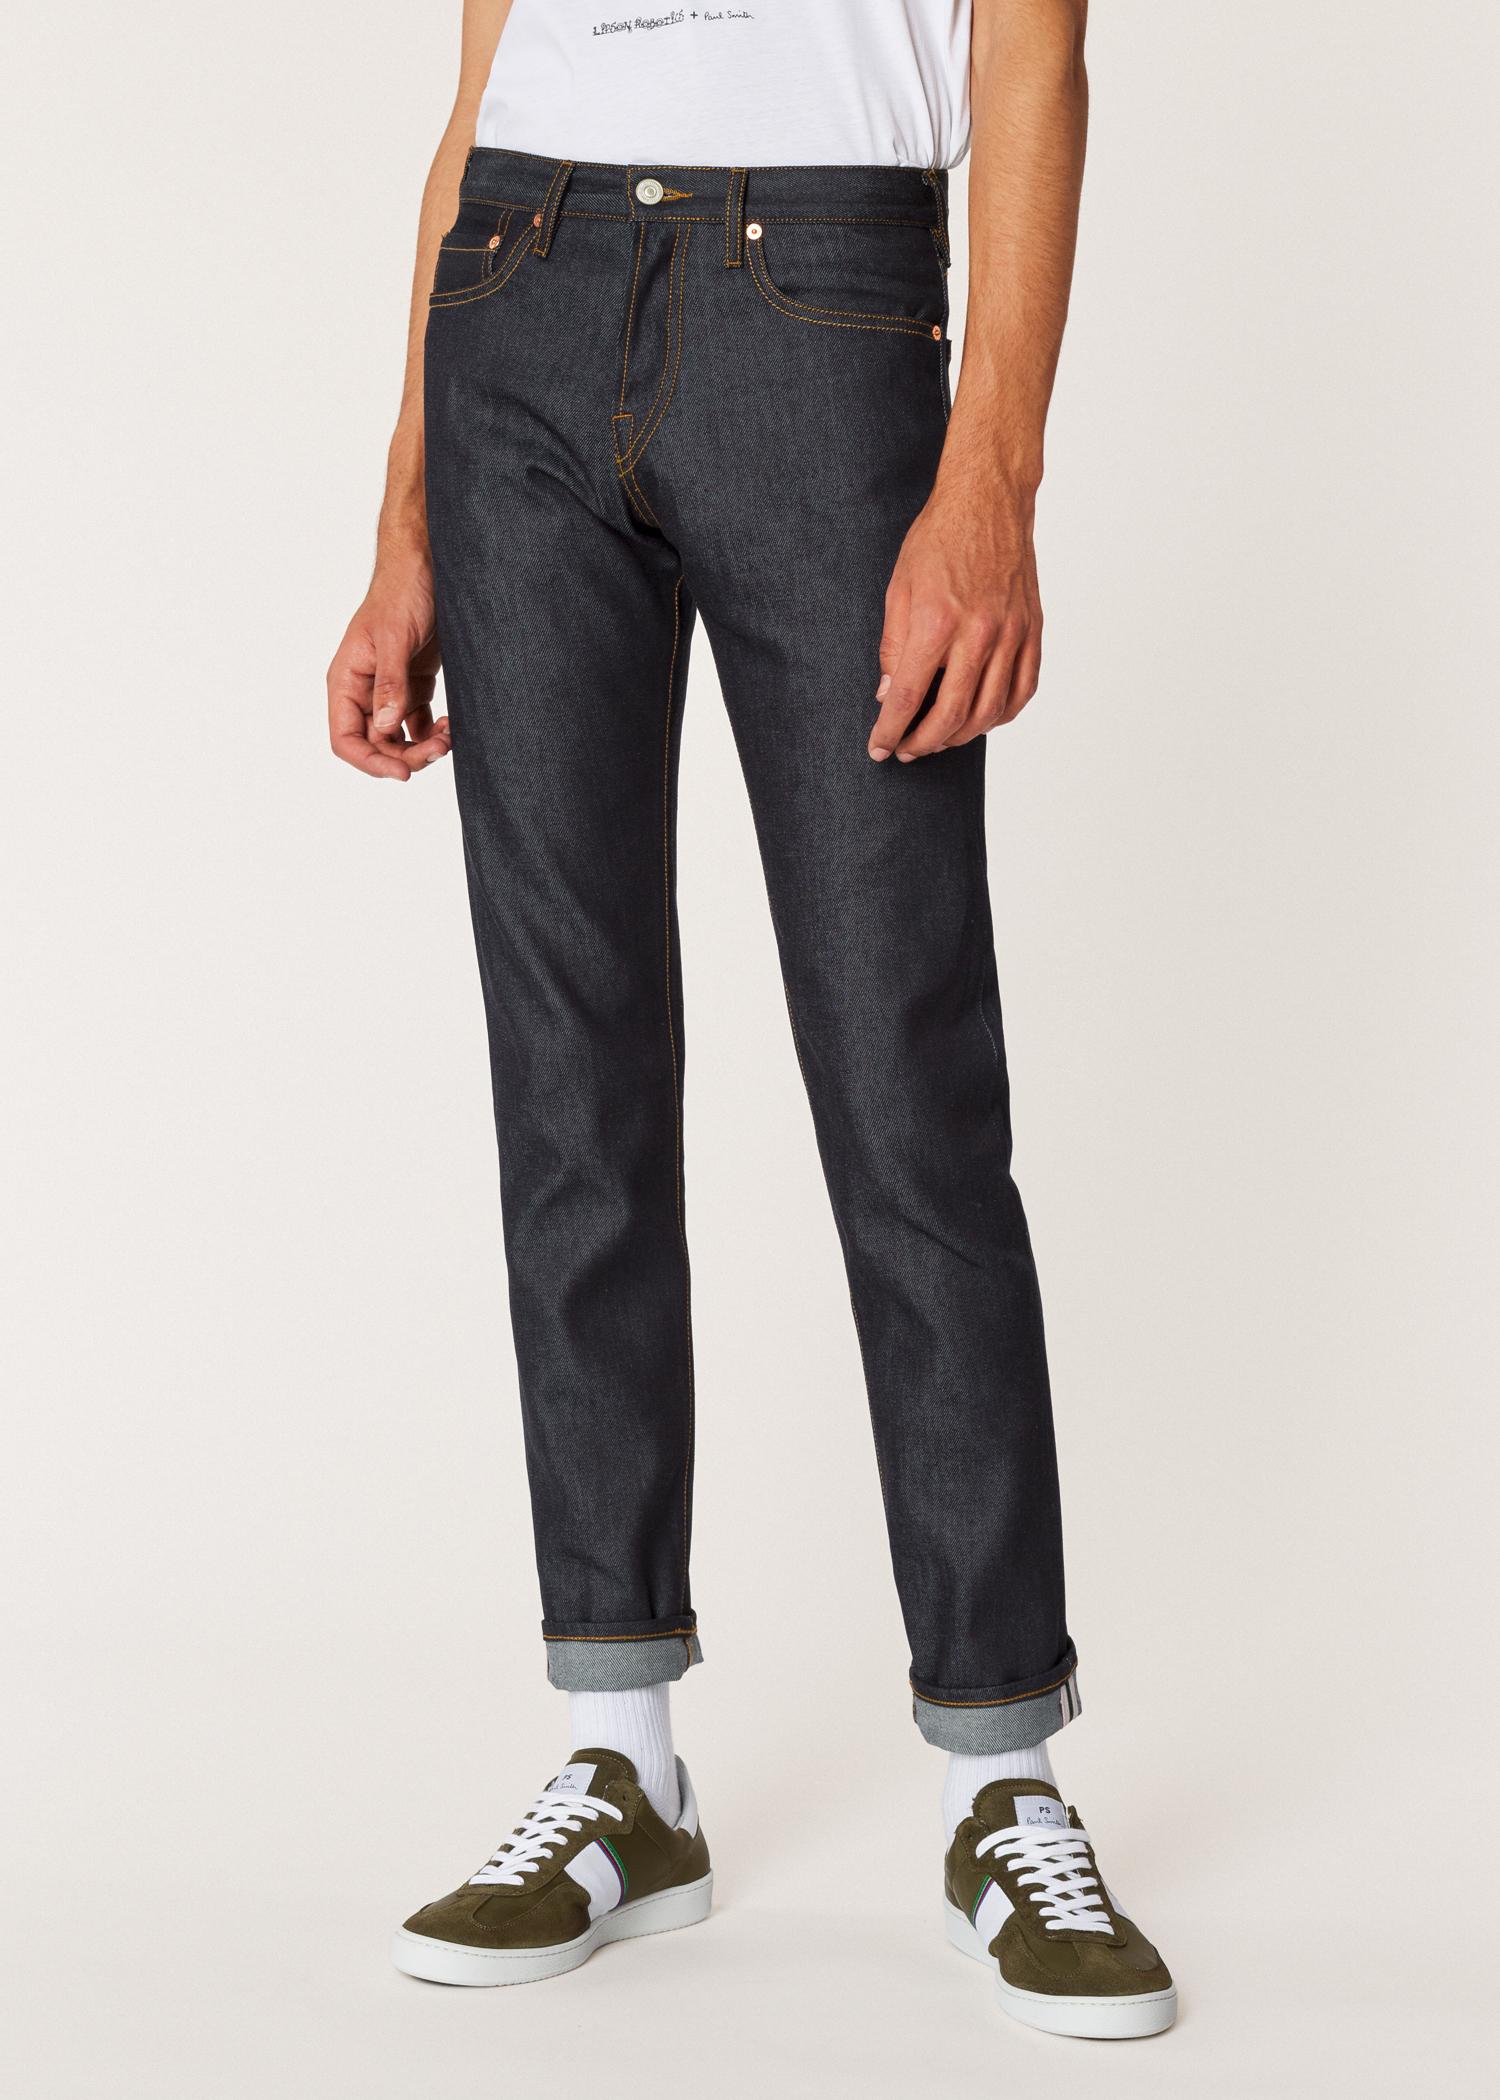 Paul Smith Slim-standard 'pink Selvedge' Raw Denim Jeans for Men - Lyst